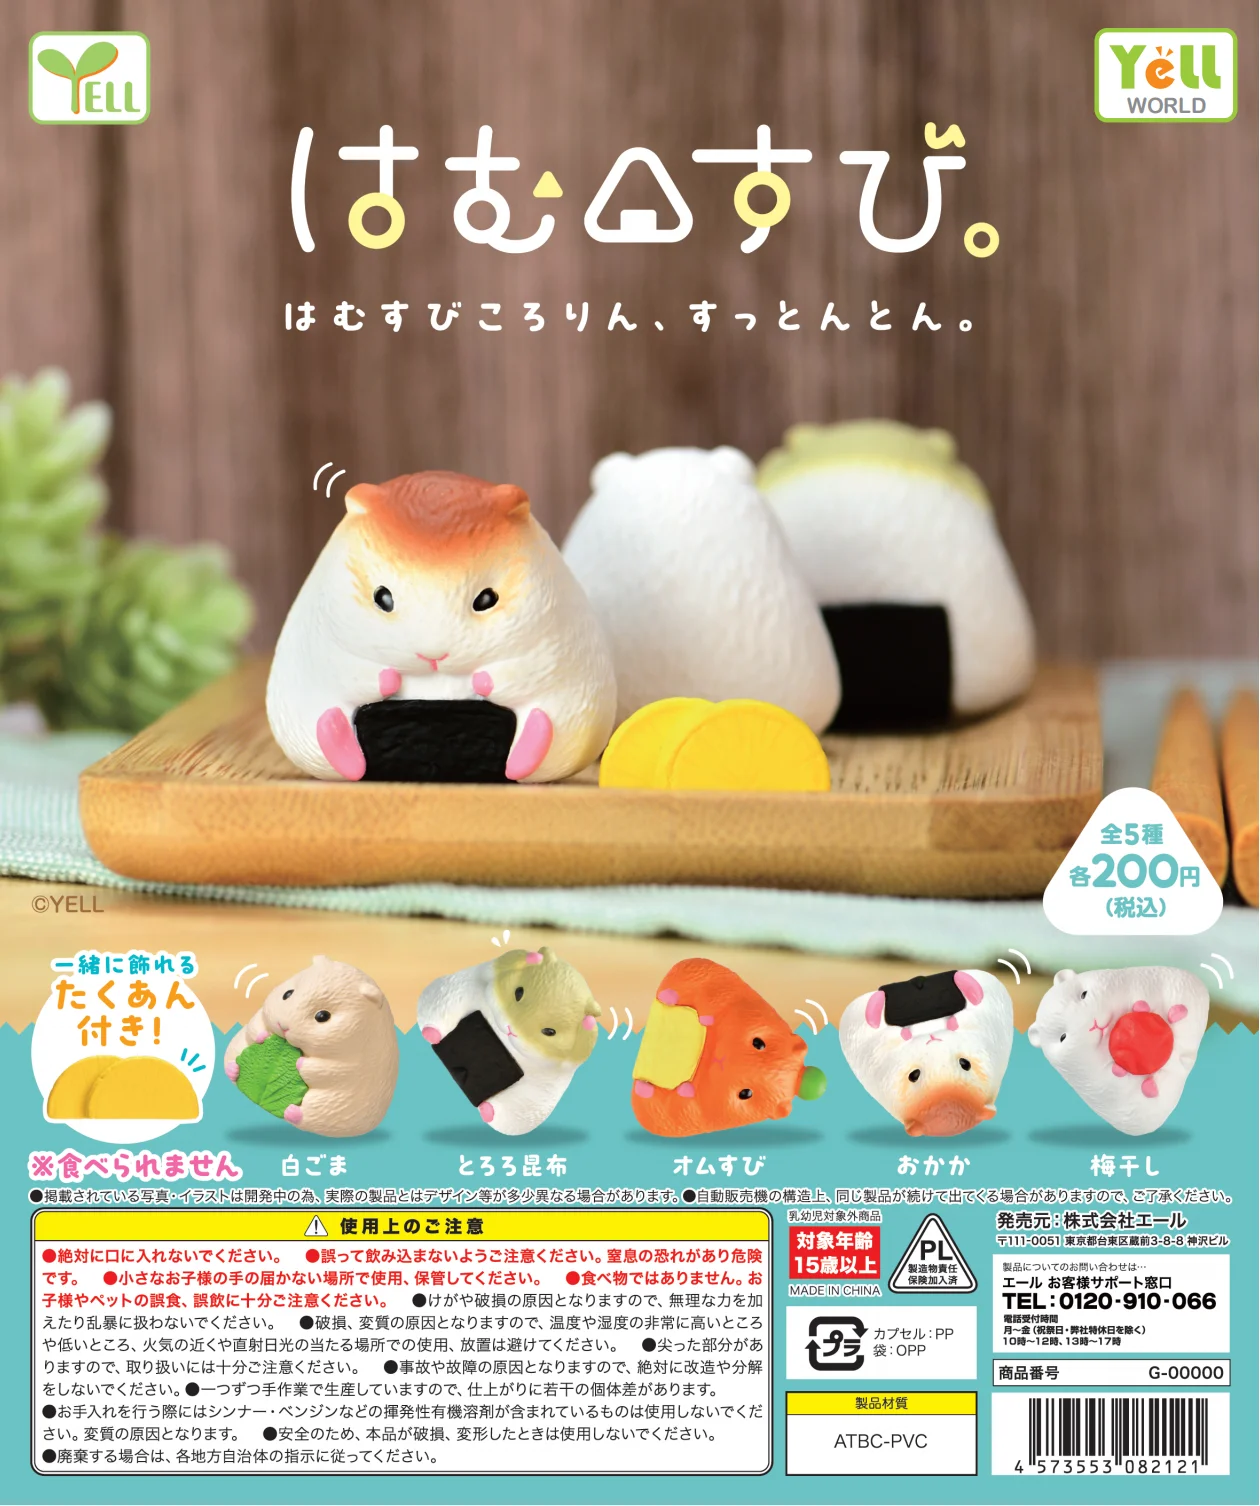 Yell world capsule toys cute kawaii Hamusubi. Hamster Bite white sesame yam kelp Omusubi Katsuobushi Umeboshi gashapon figures